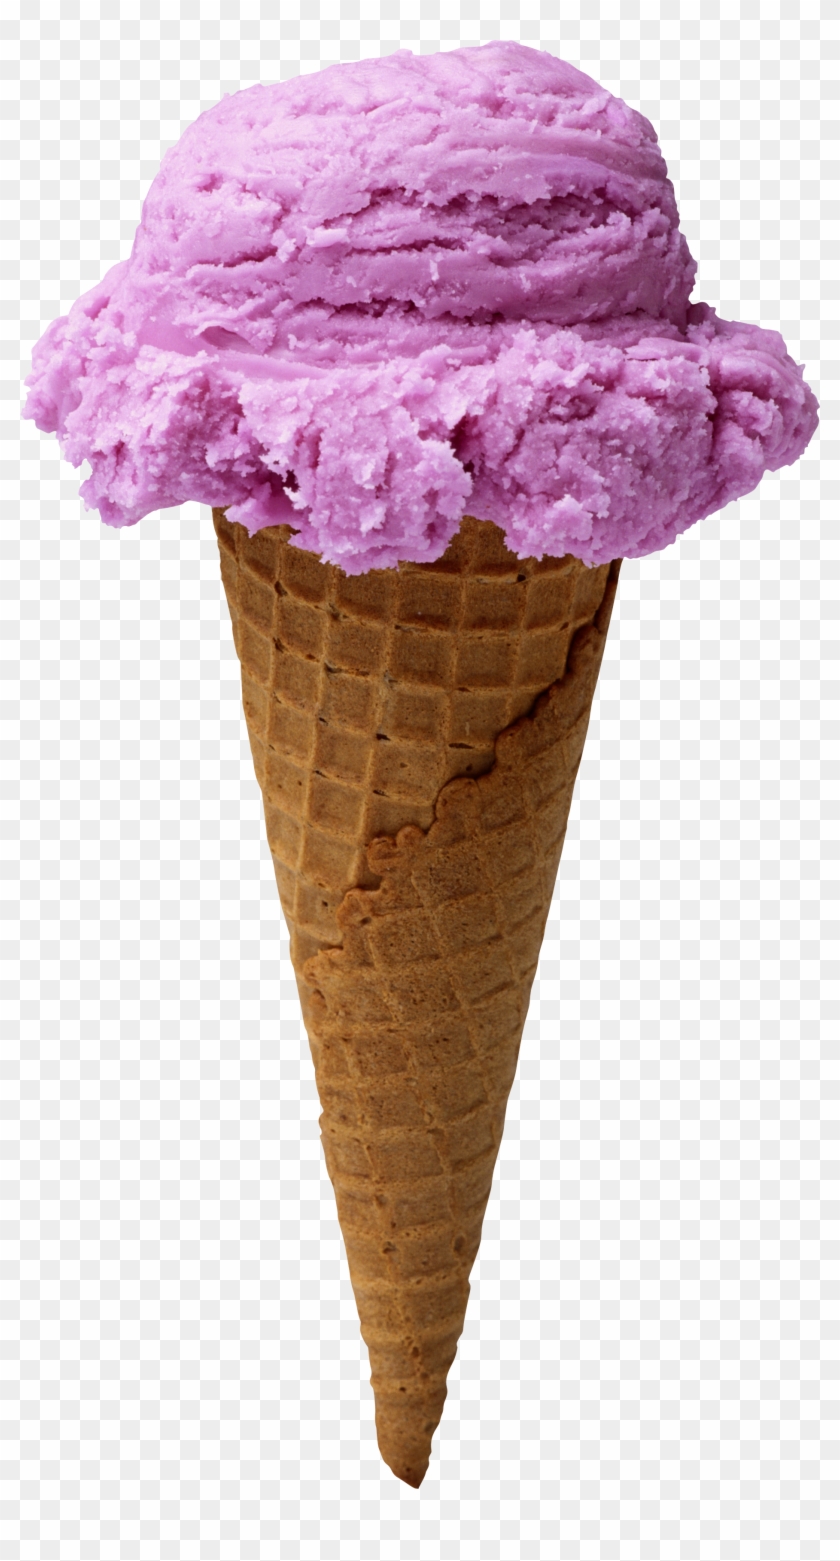 Ice Cream Png Image - Ice Cream Cone Variety Clipart